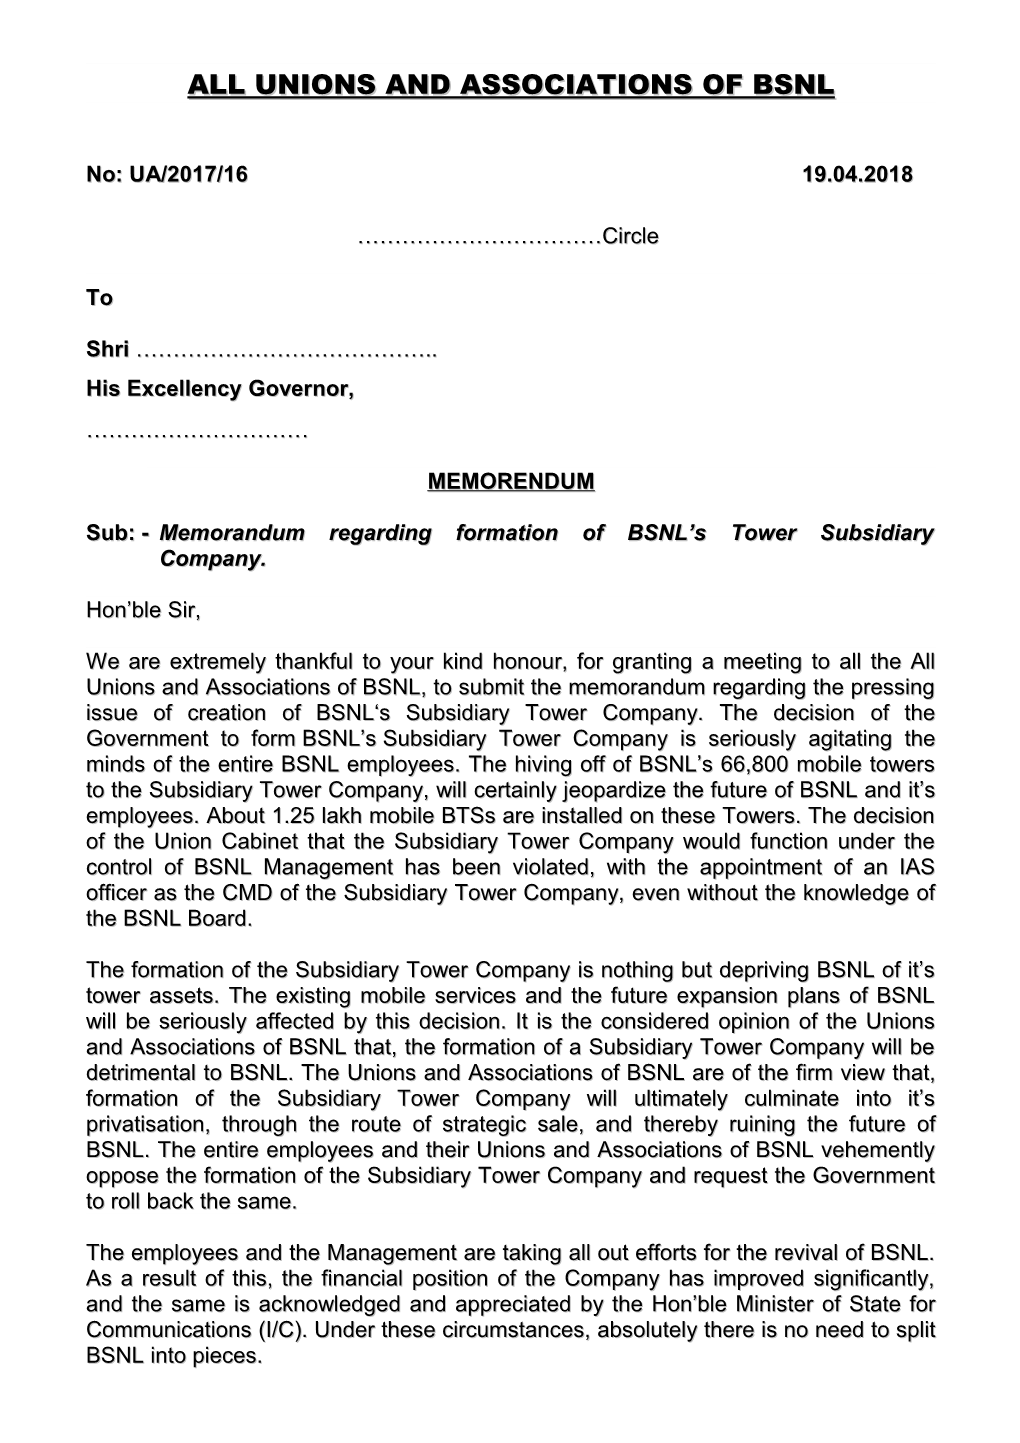 Sub: -Memorandum Regarding Formation of BSNL S Tower Subsidiarycompany